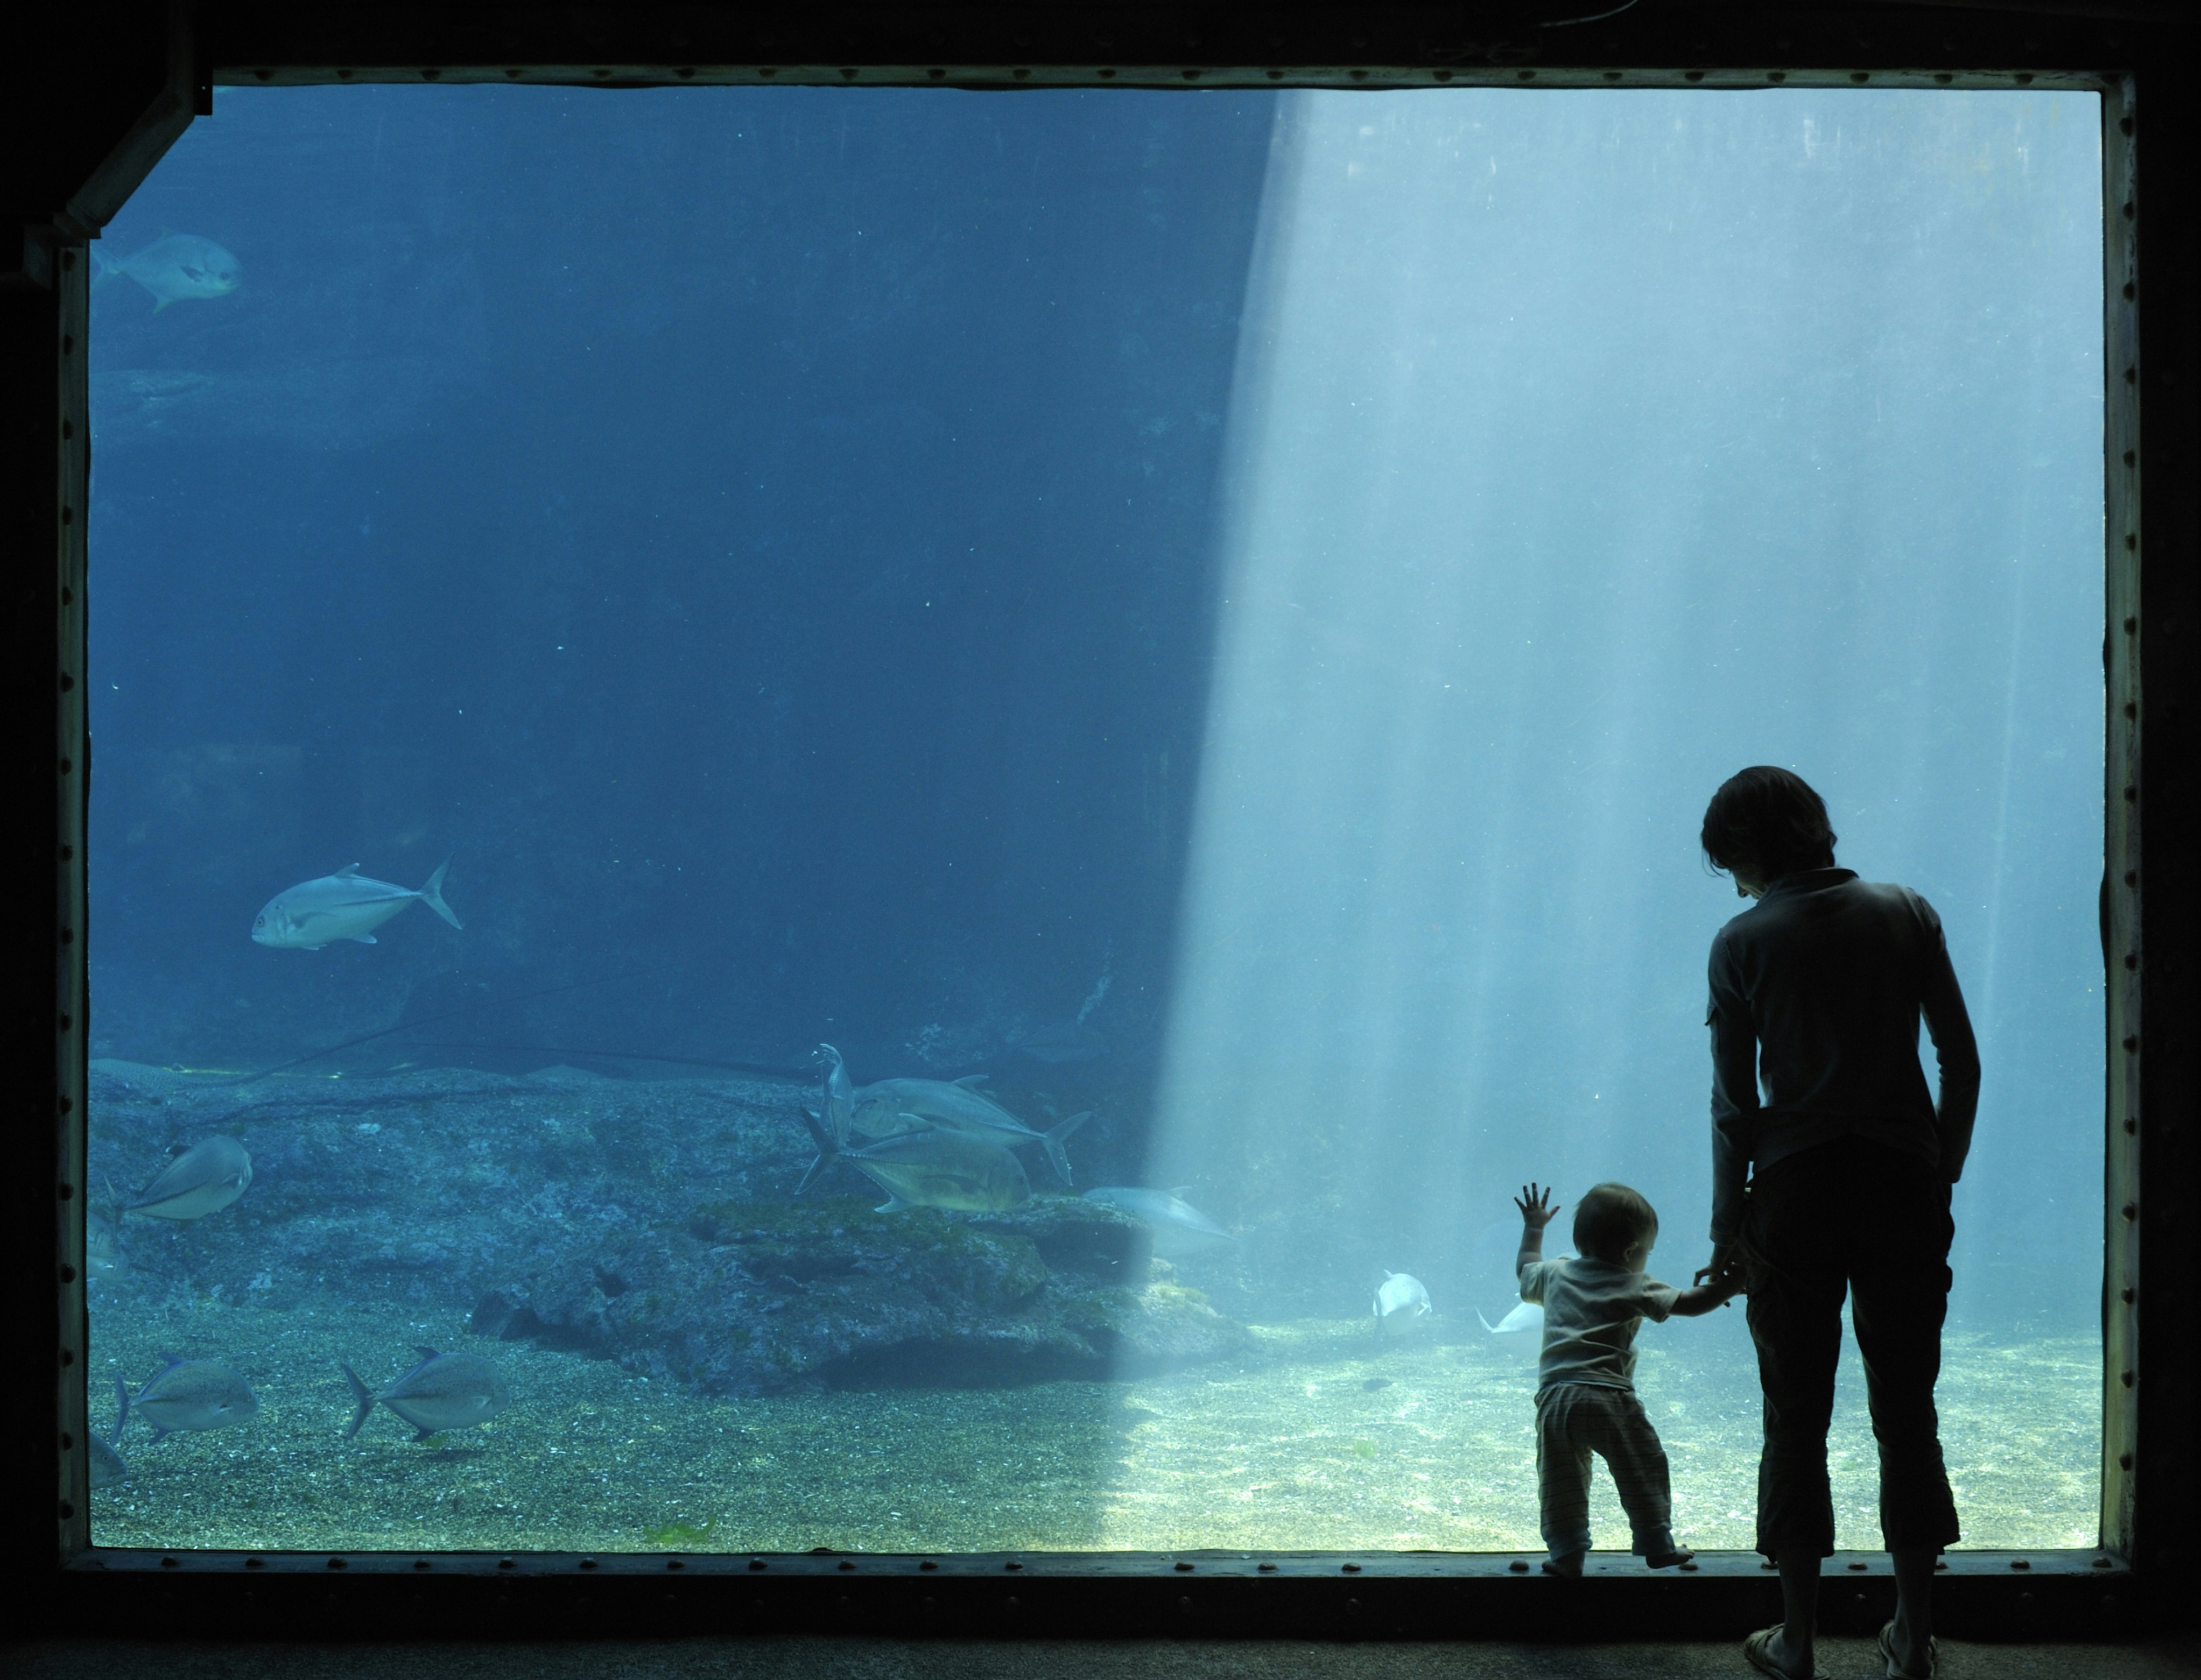 Toddler and mother looking at fish in a large aquarium, Ushaka, Durban, Kwazulu-Natal, South Africa